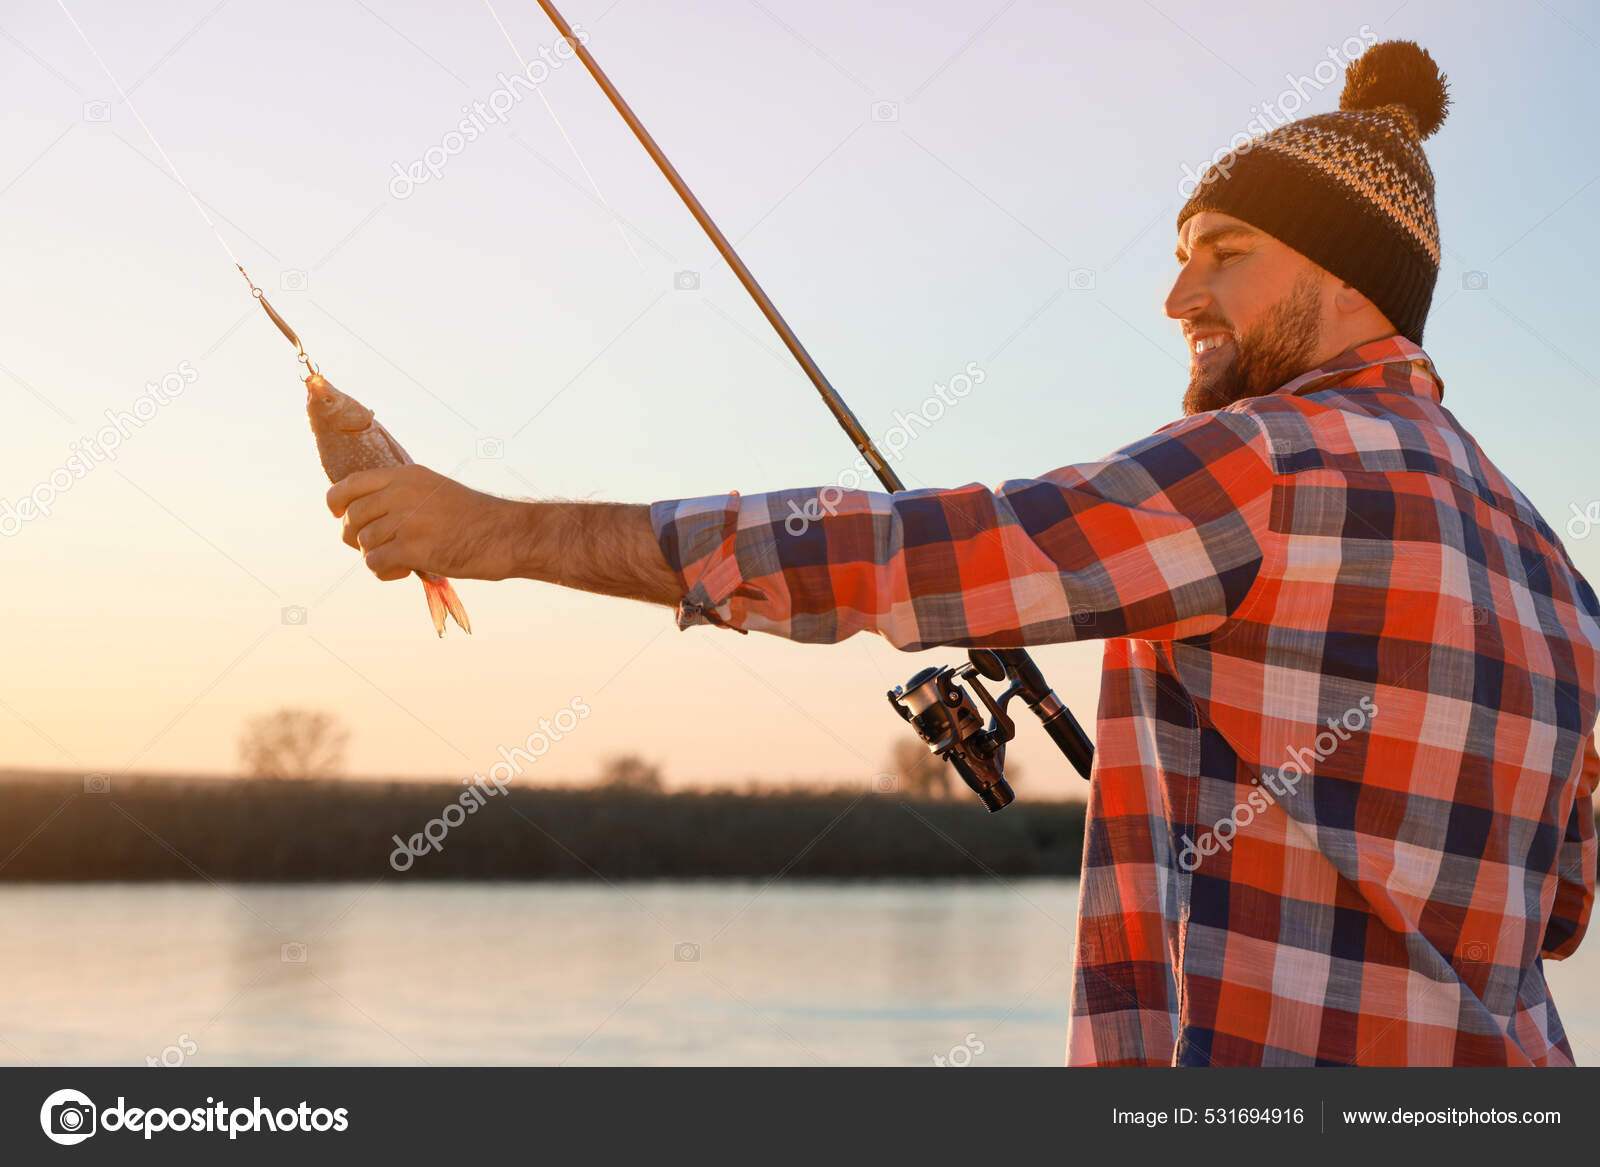 https://st.depositphotos.com/16122460/53169/i/1600/depositphotos_531694916-stock-photo-fisherman-rod-caught-fish-riverside.jpg